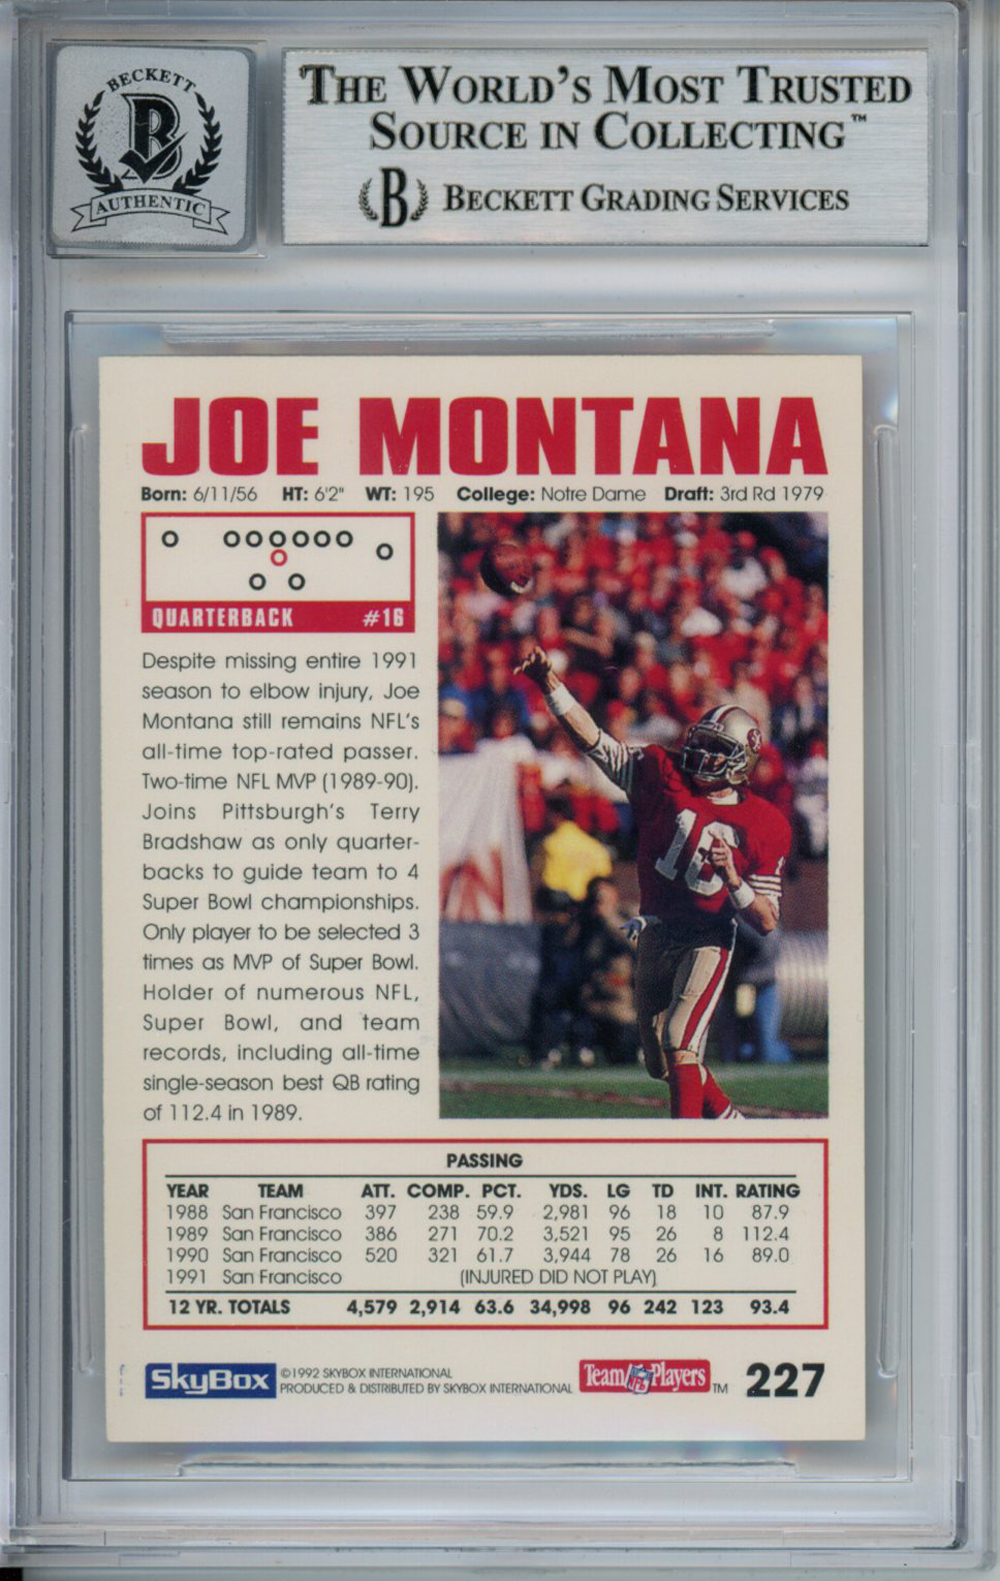 Joe Montana Autographed 1992 Skybox #227 Trading Card Beckett 10 Slab